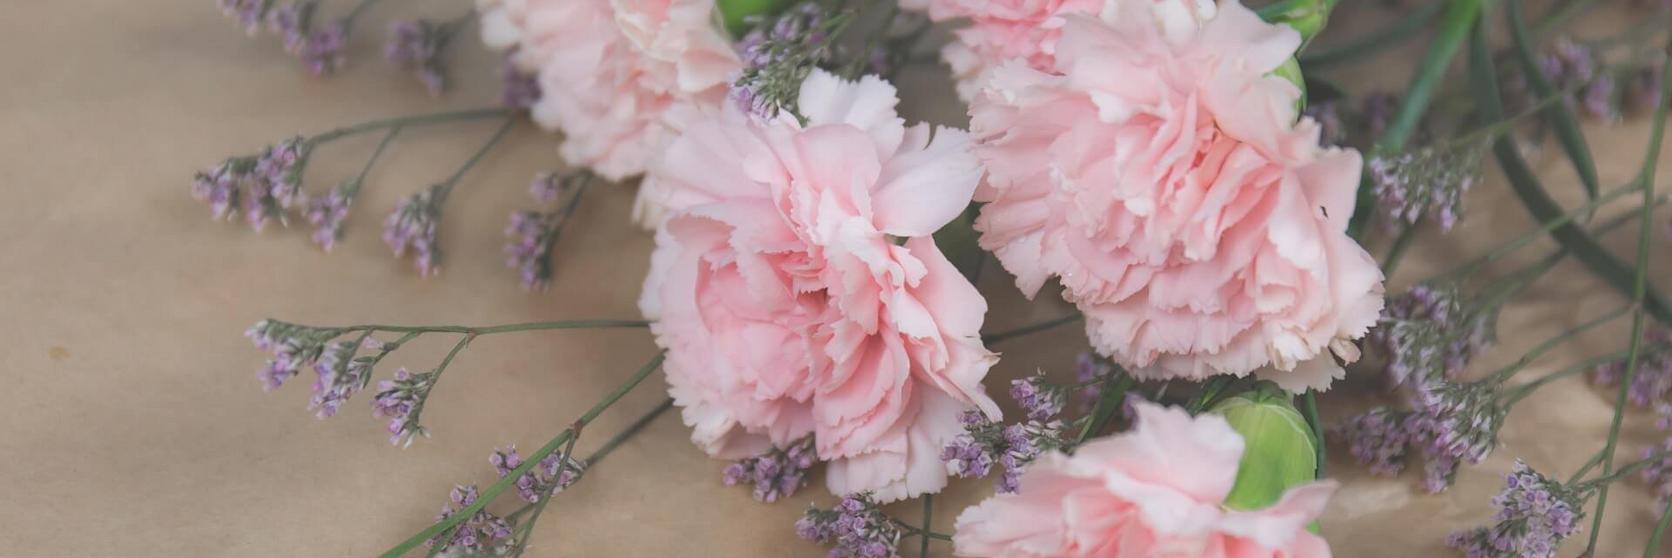 FF SEO_birthMonthFlowers_carnations